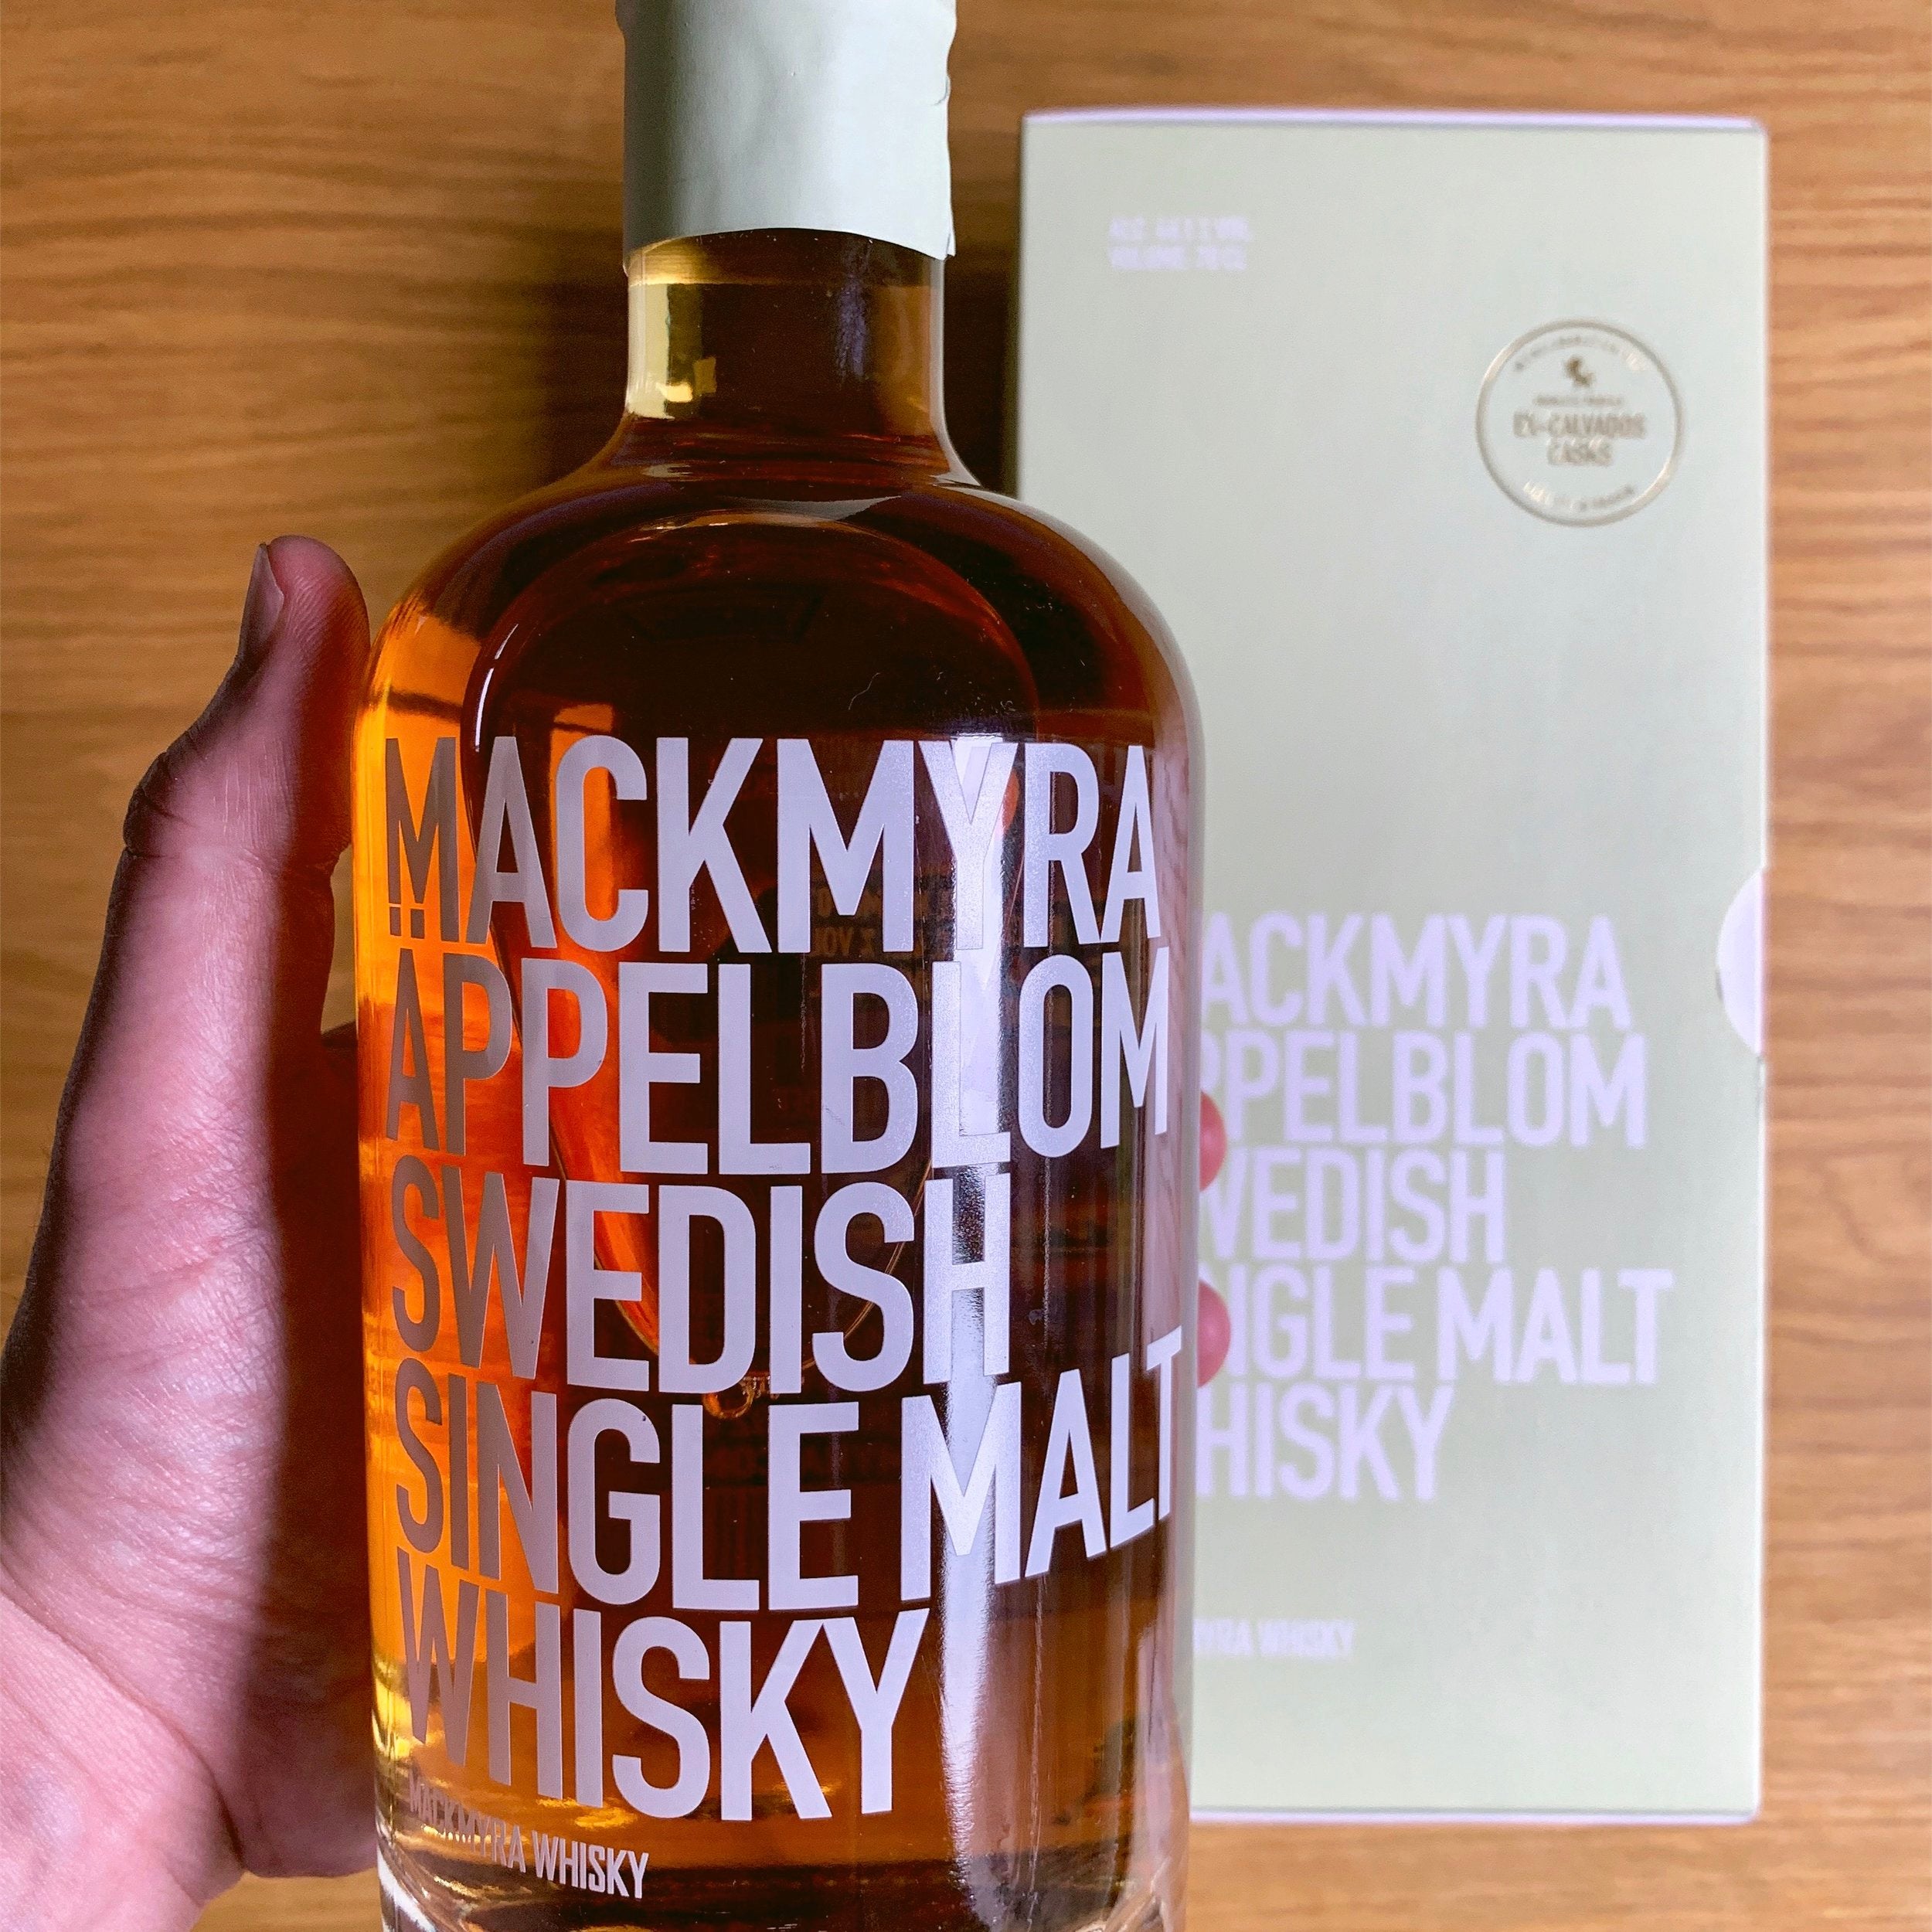 Mackmyra Appelblom Swedish single malt whisky